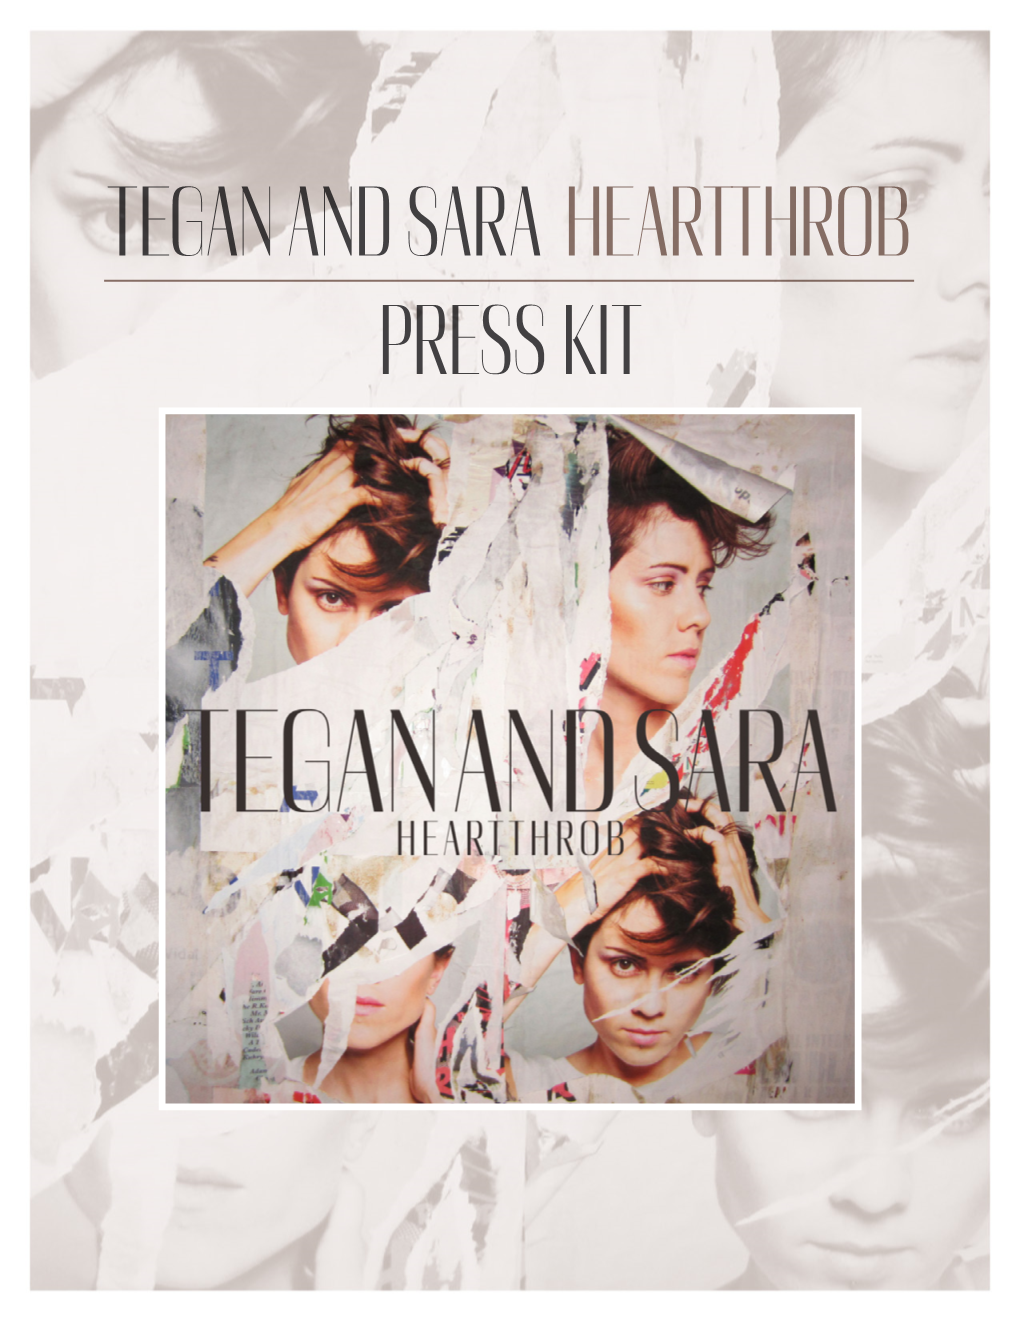 Tegan and Sara Heartthrob Press Kit Tegan and Sara / Heartthrob Press Kit